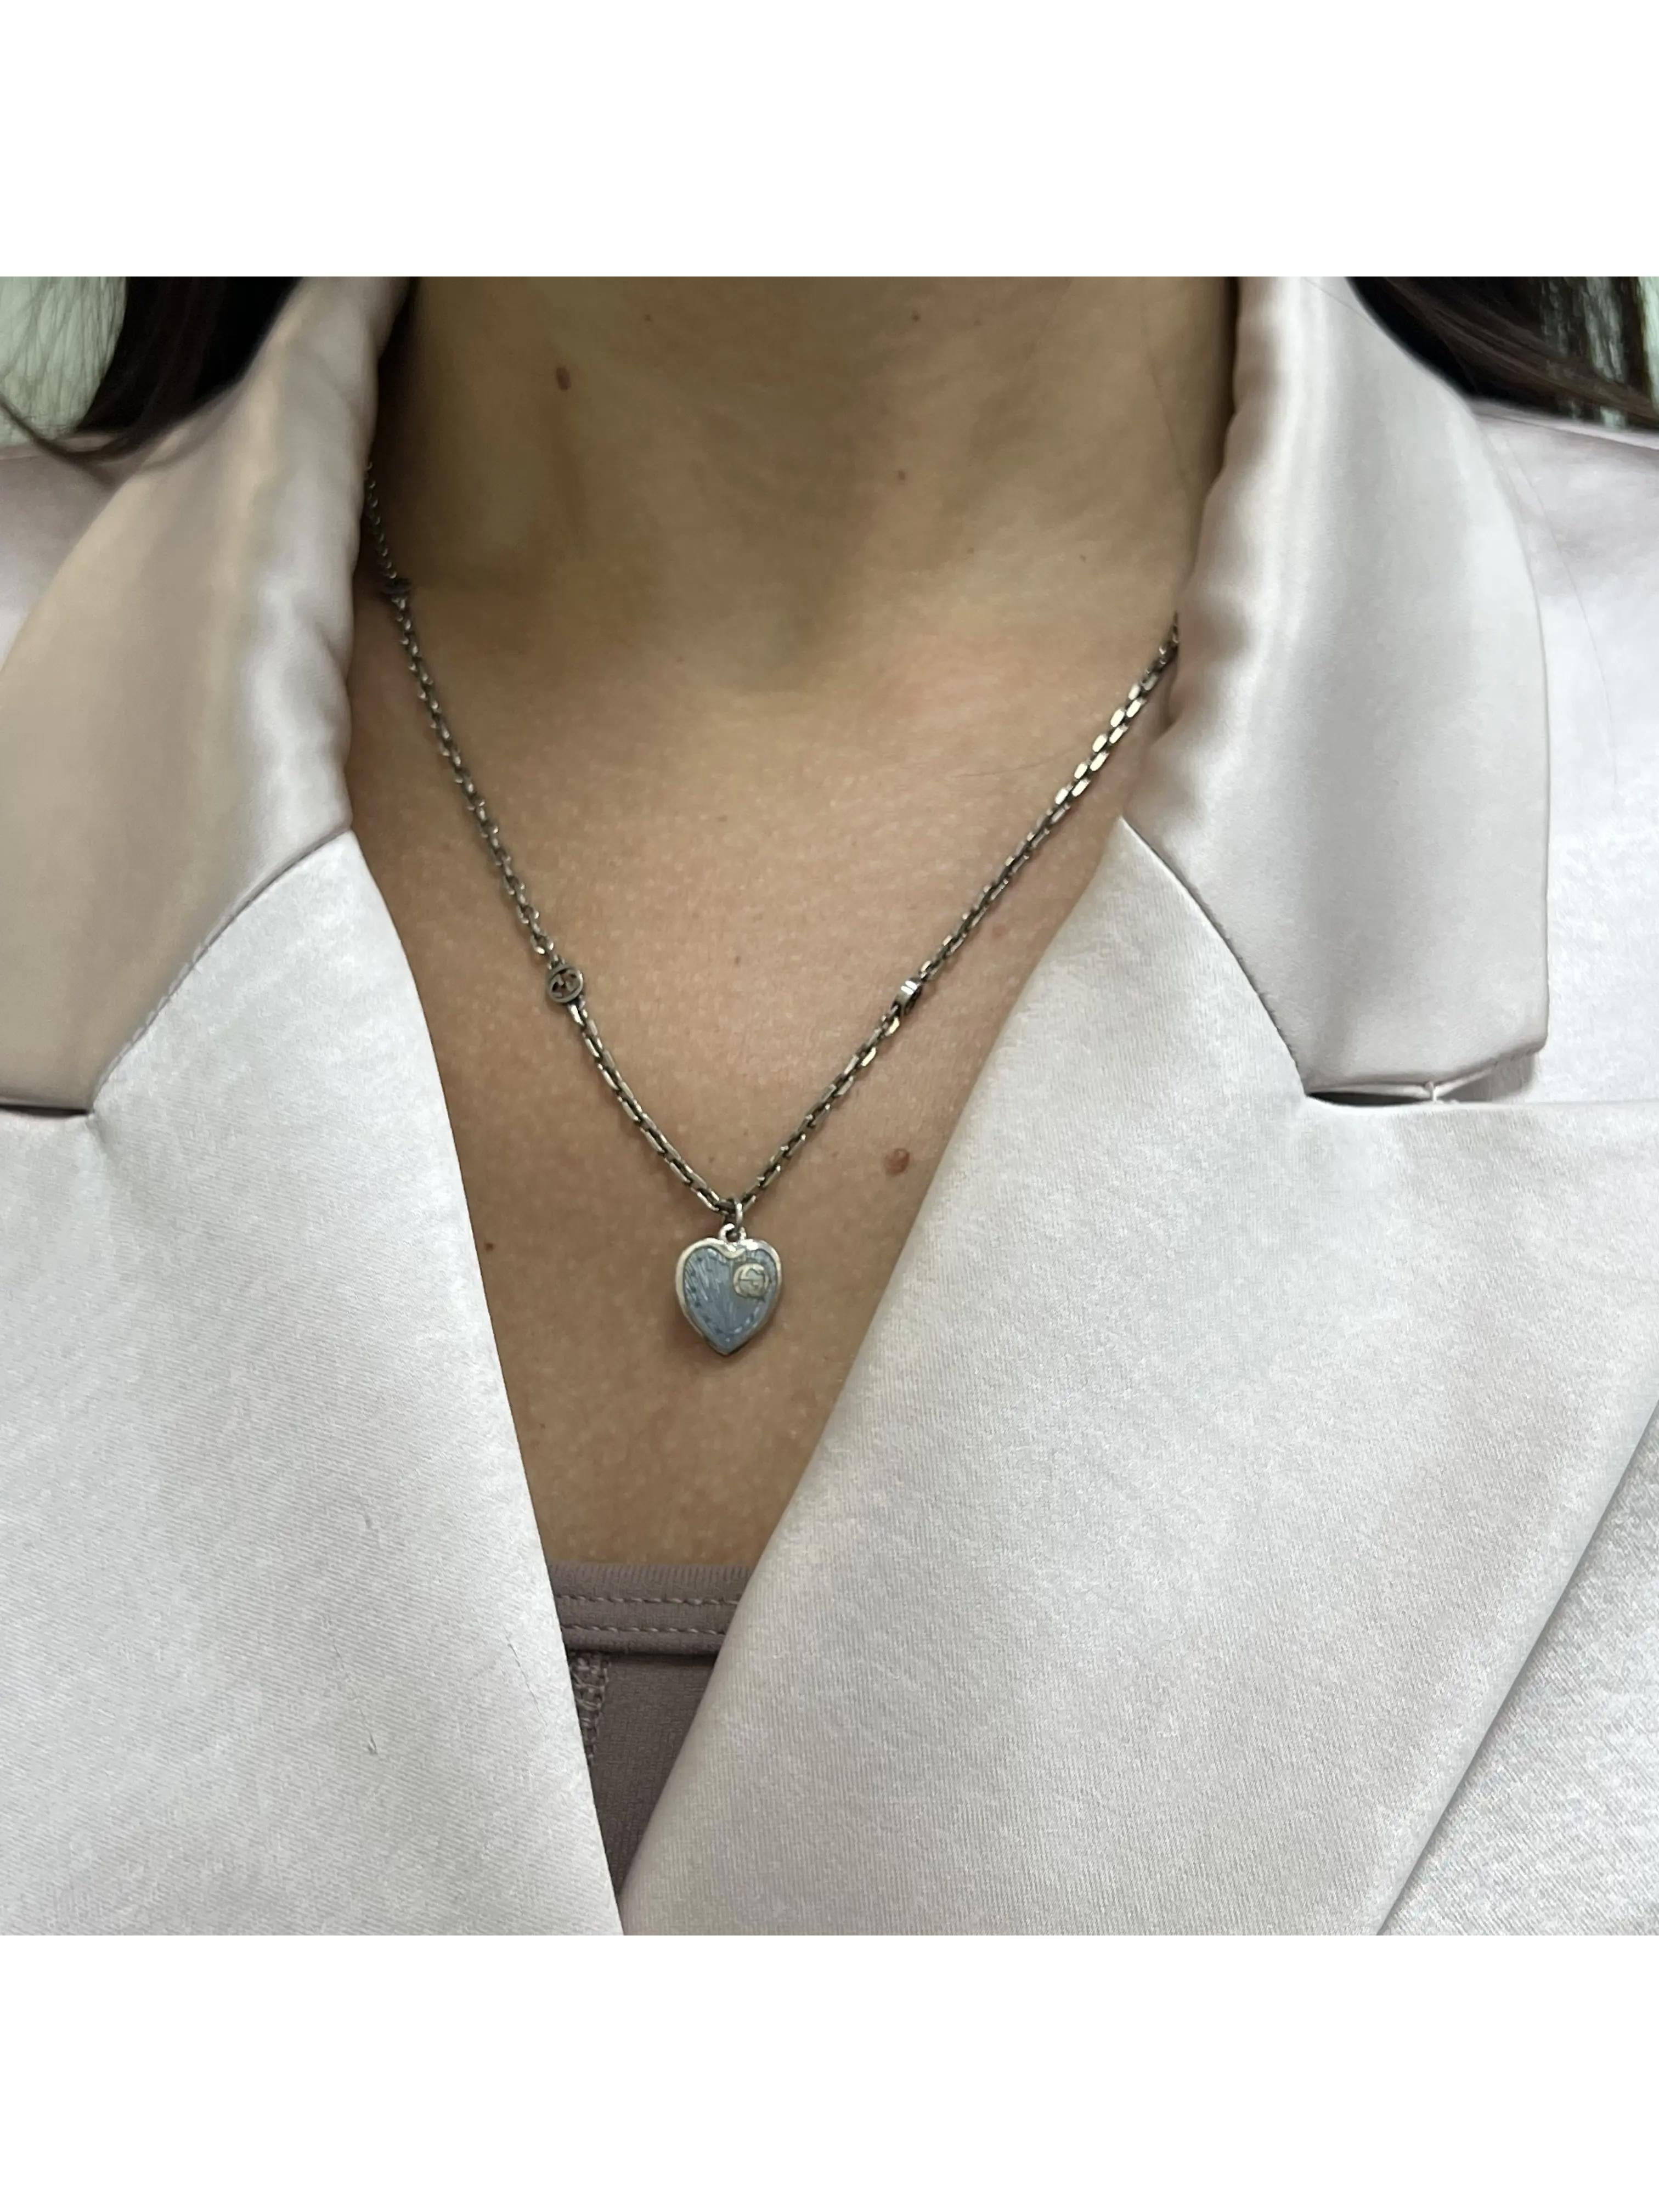 GUCCI Interlocking Circle GG Pendant Necklace in Sterling Silver | Necklace,  Silver, Pendant